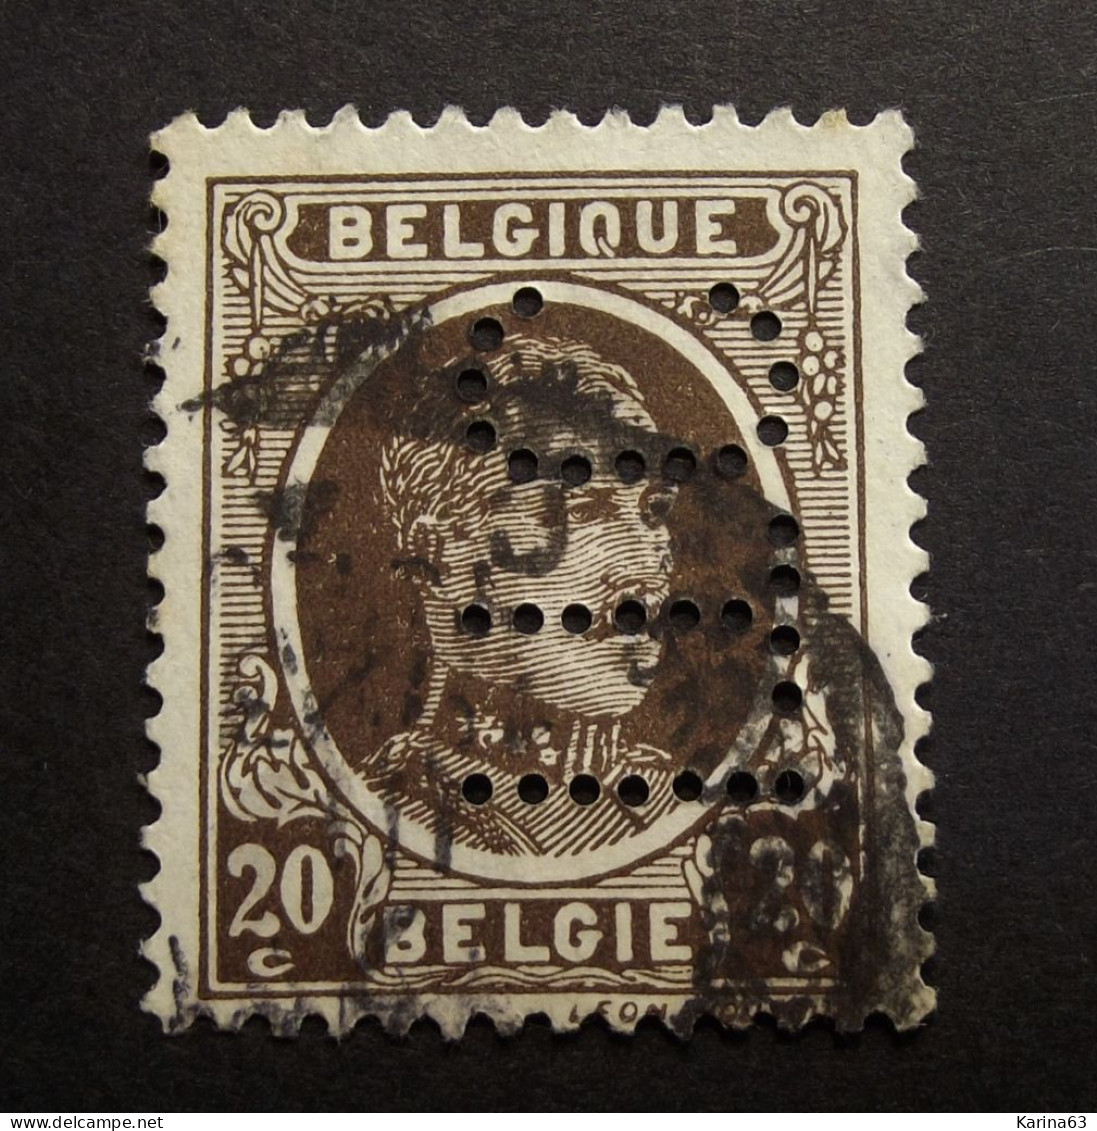 België - Belgique  Perfin - Perforé - I T C -  Isbecque Todd & C° Couvin - COB 196 Cancelled - 1909-34